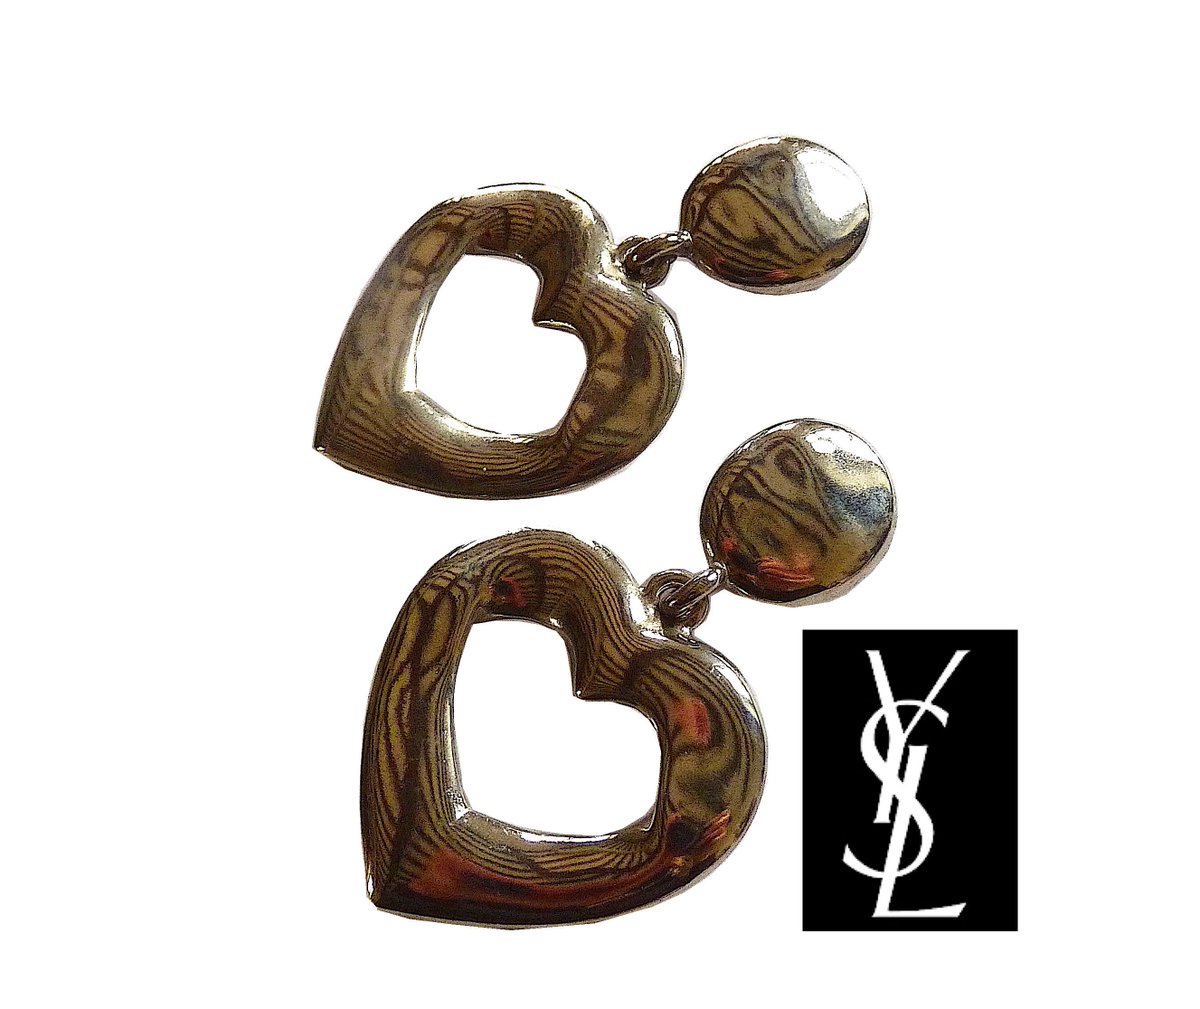 Just listed on Vintage Paris Luxe : YVES SAINT LAURENT 80s Earrings, Silver tone metal, Free Shipping !
#vintageparisluxe #yslearrings #yslvintage #yvessaint laurent80s #80sjewelry #giftforher